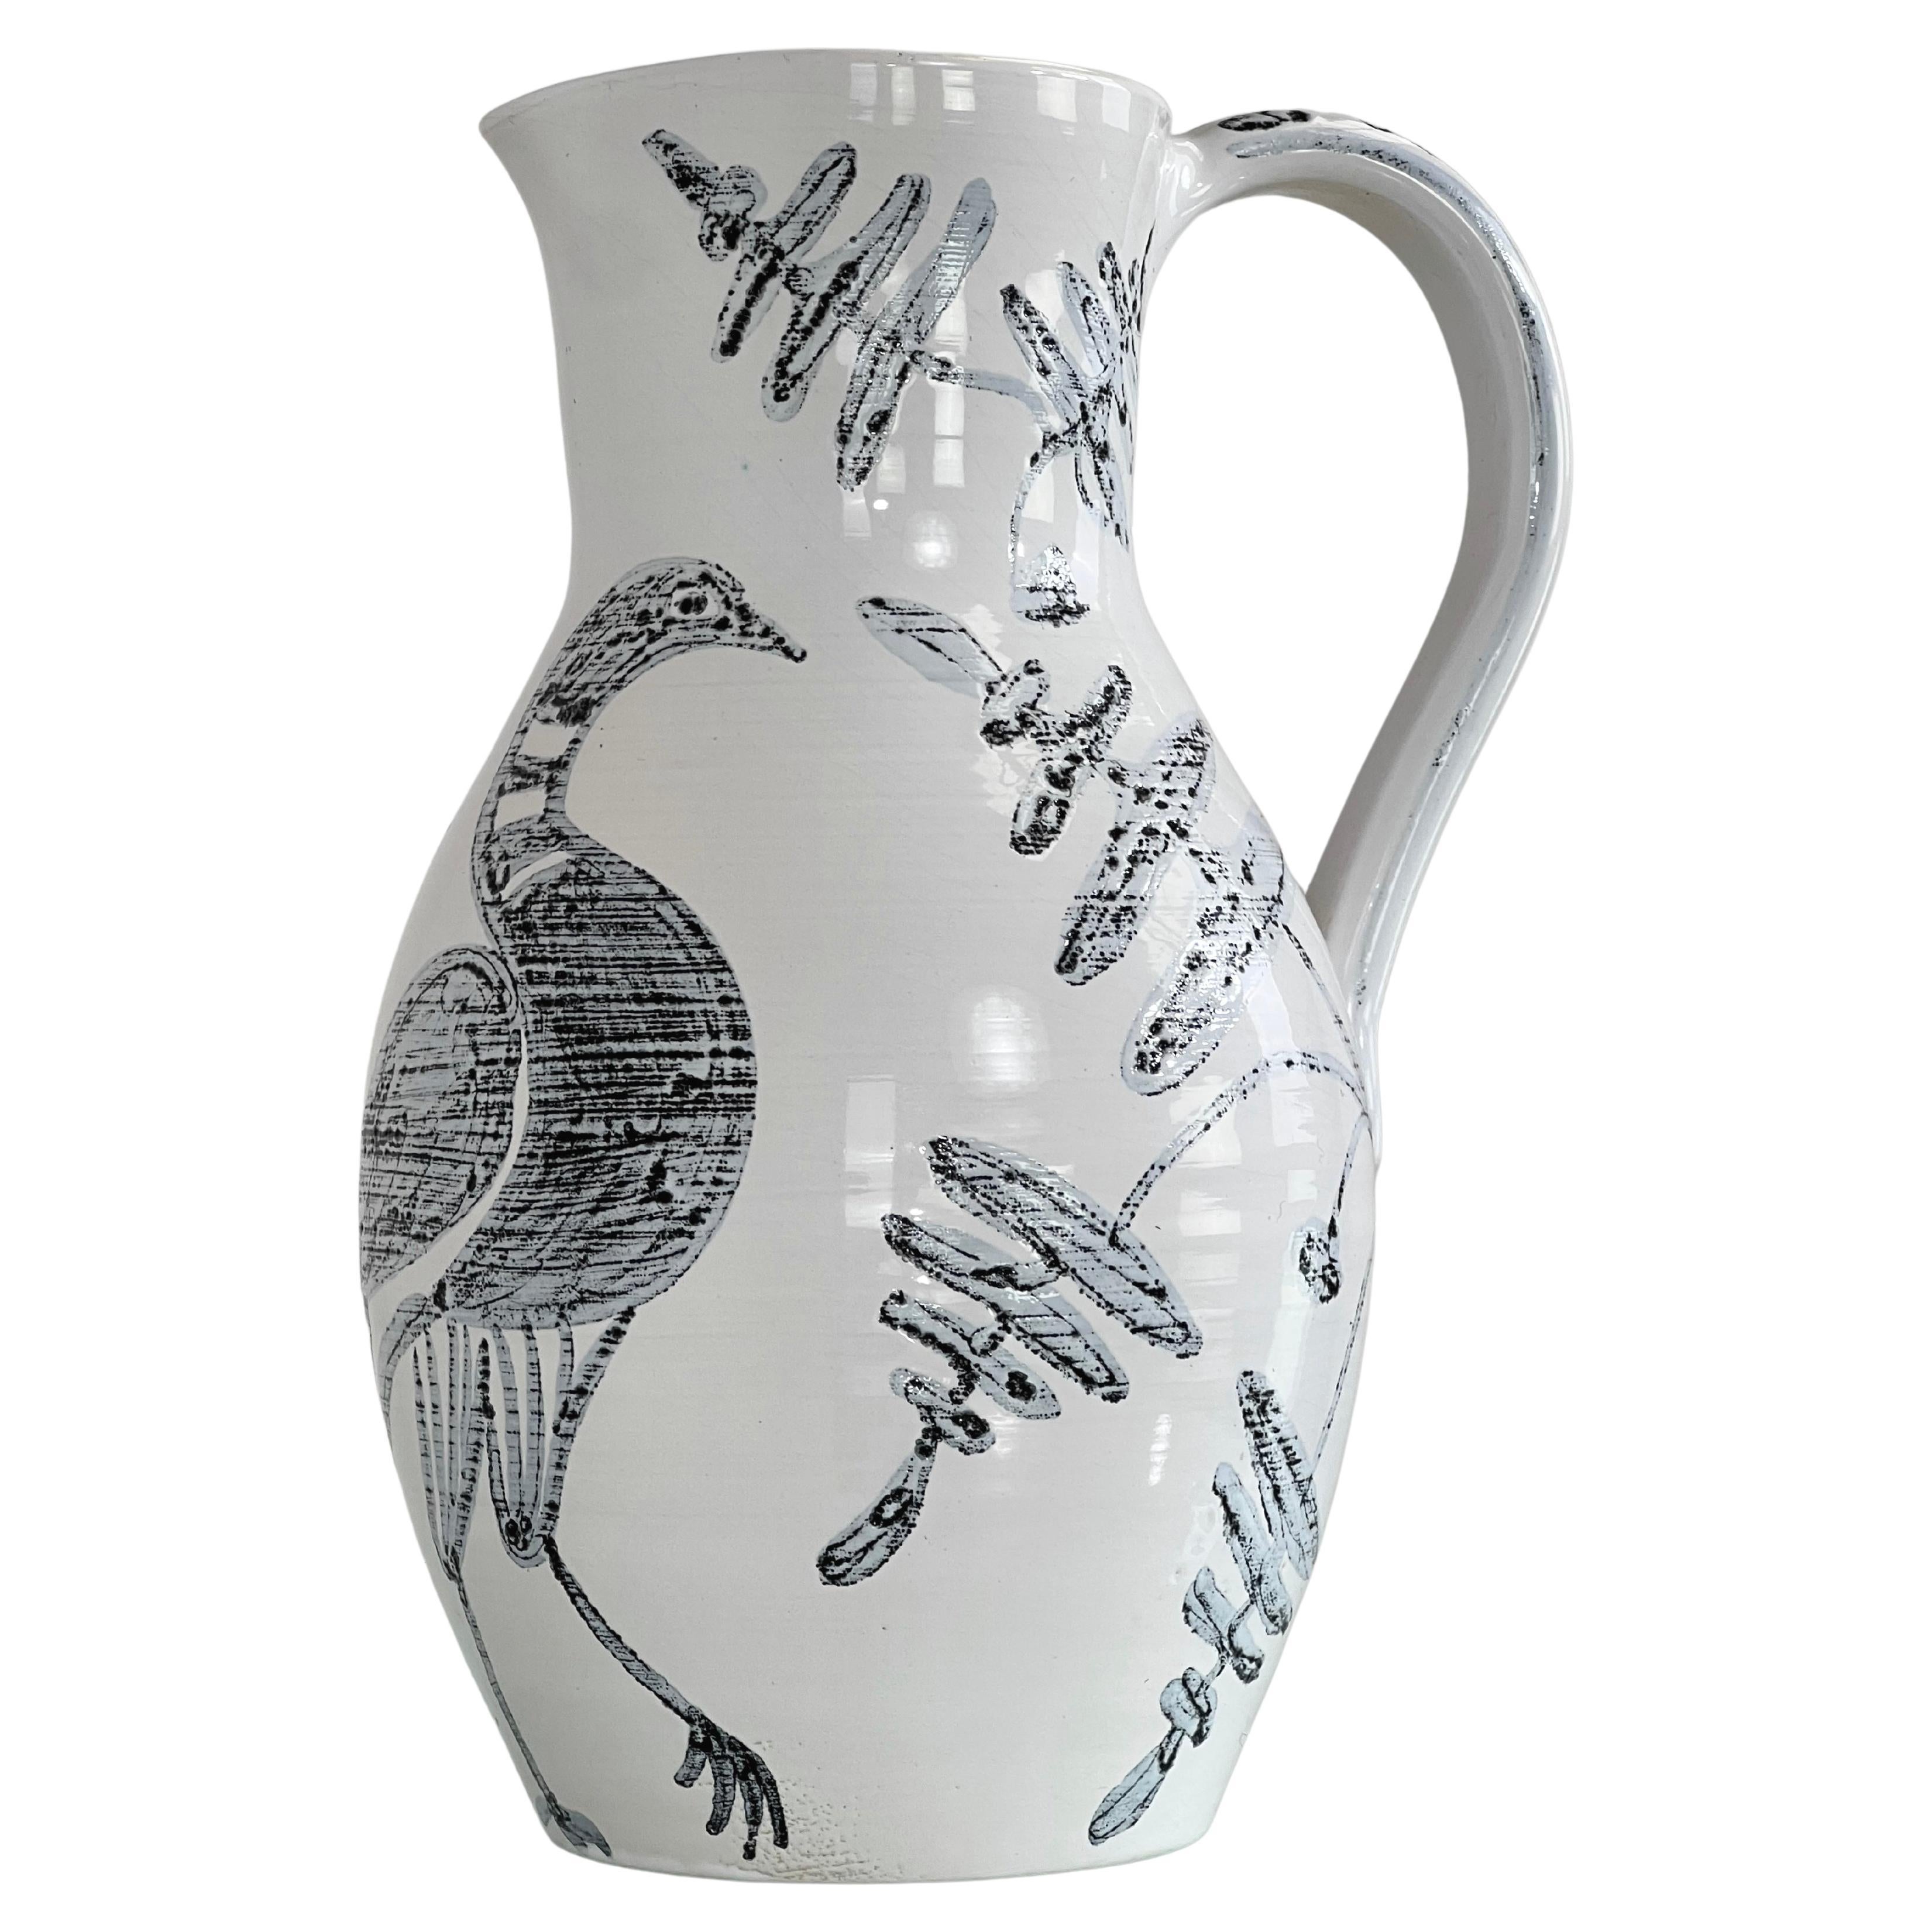 1960er Jahre Handgefertigte Keramik Krug Vase